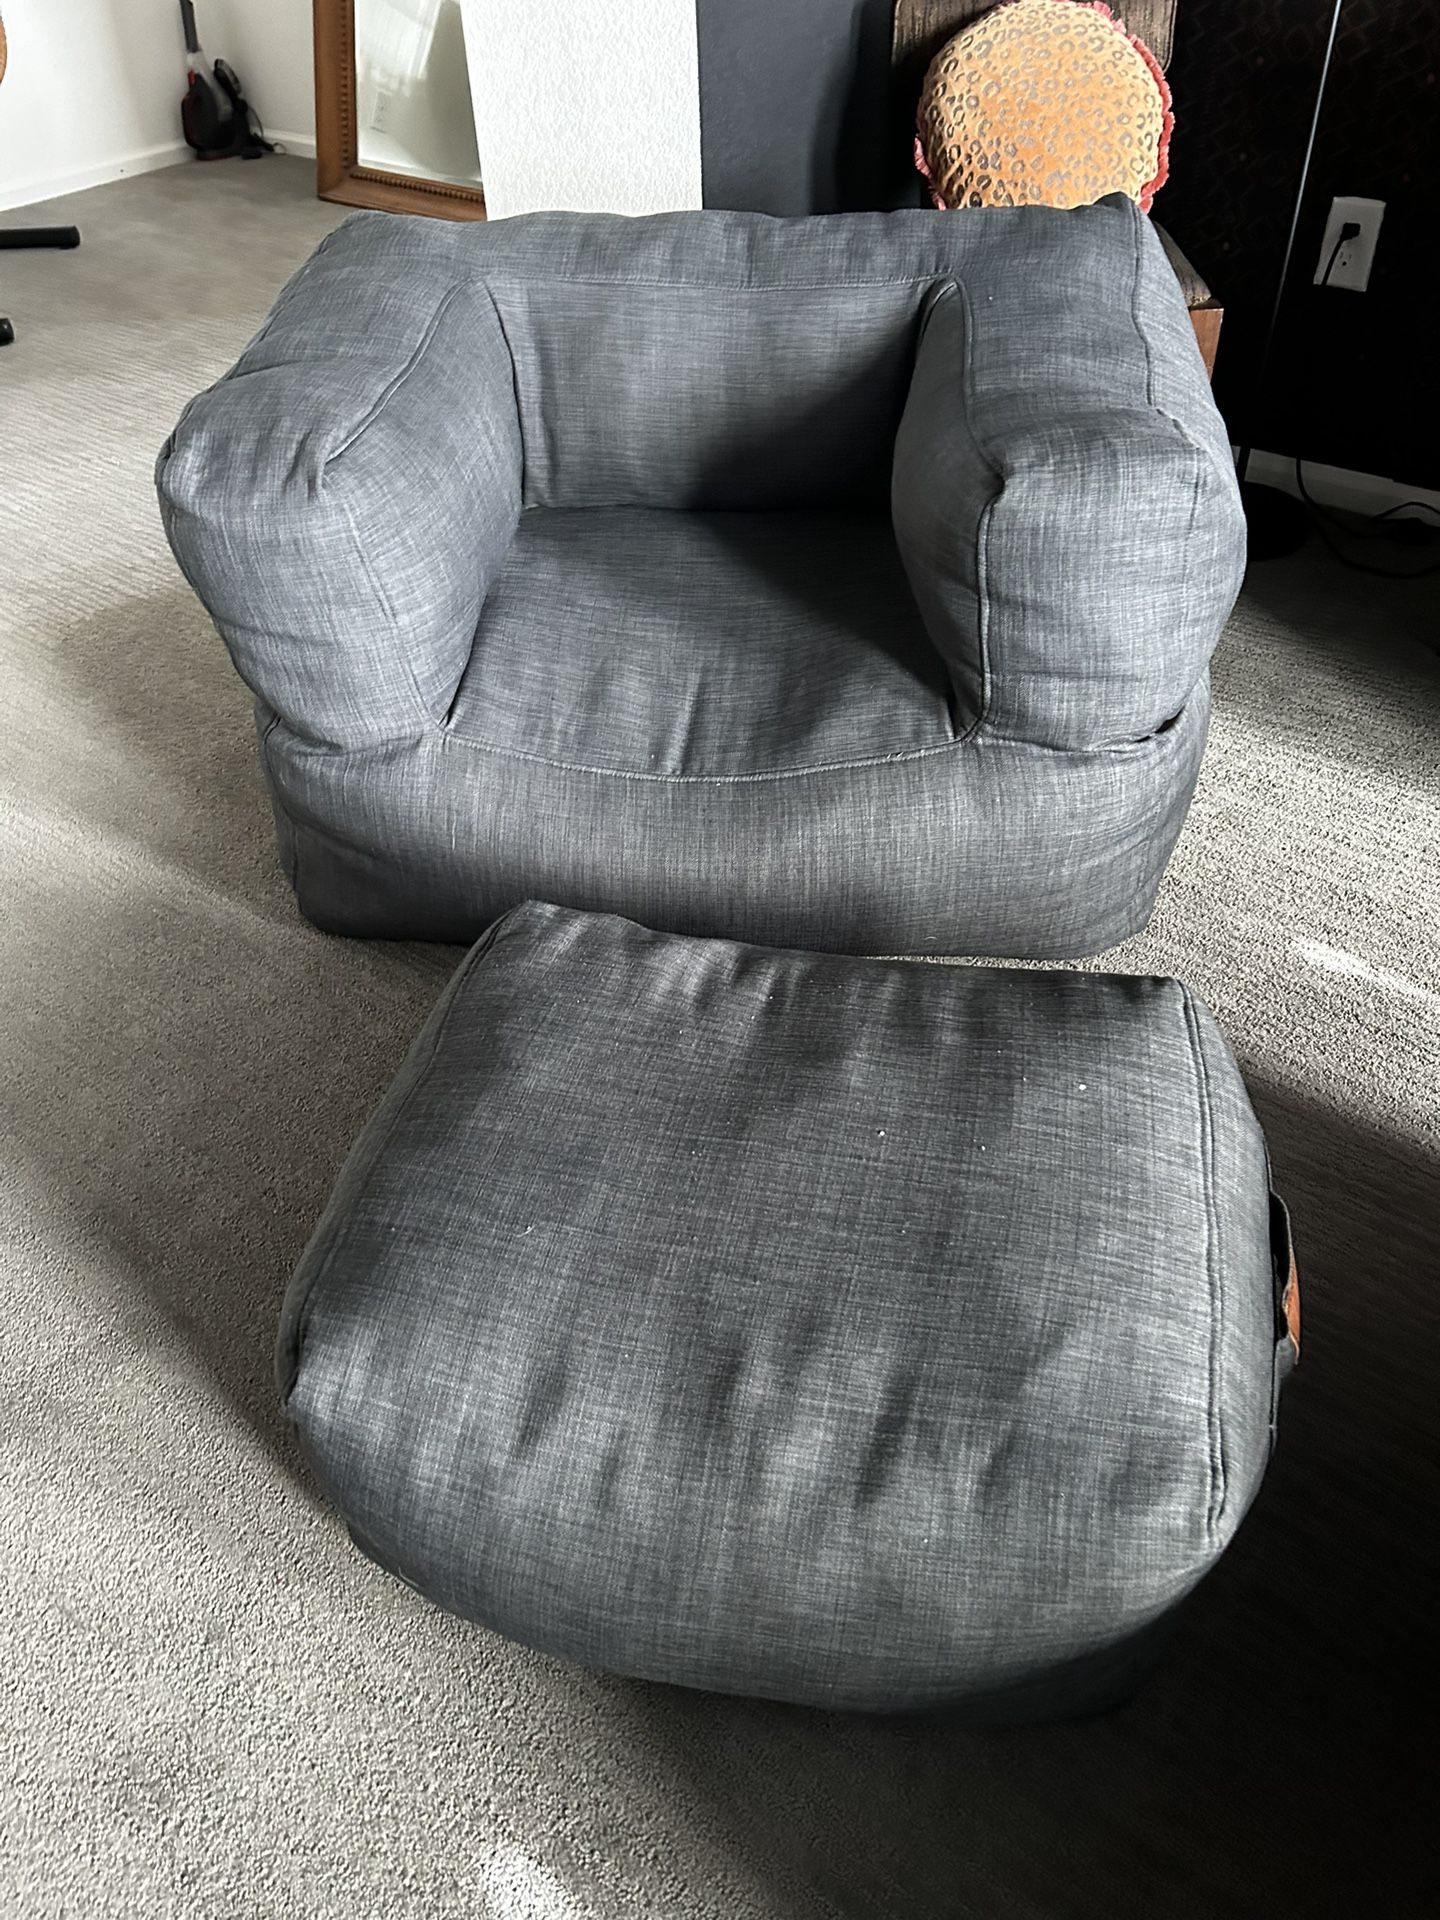 Comfy Lounge Chair w/ottoman